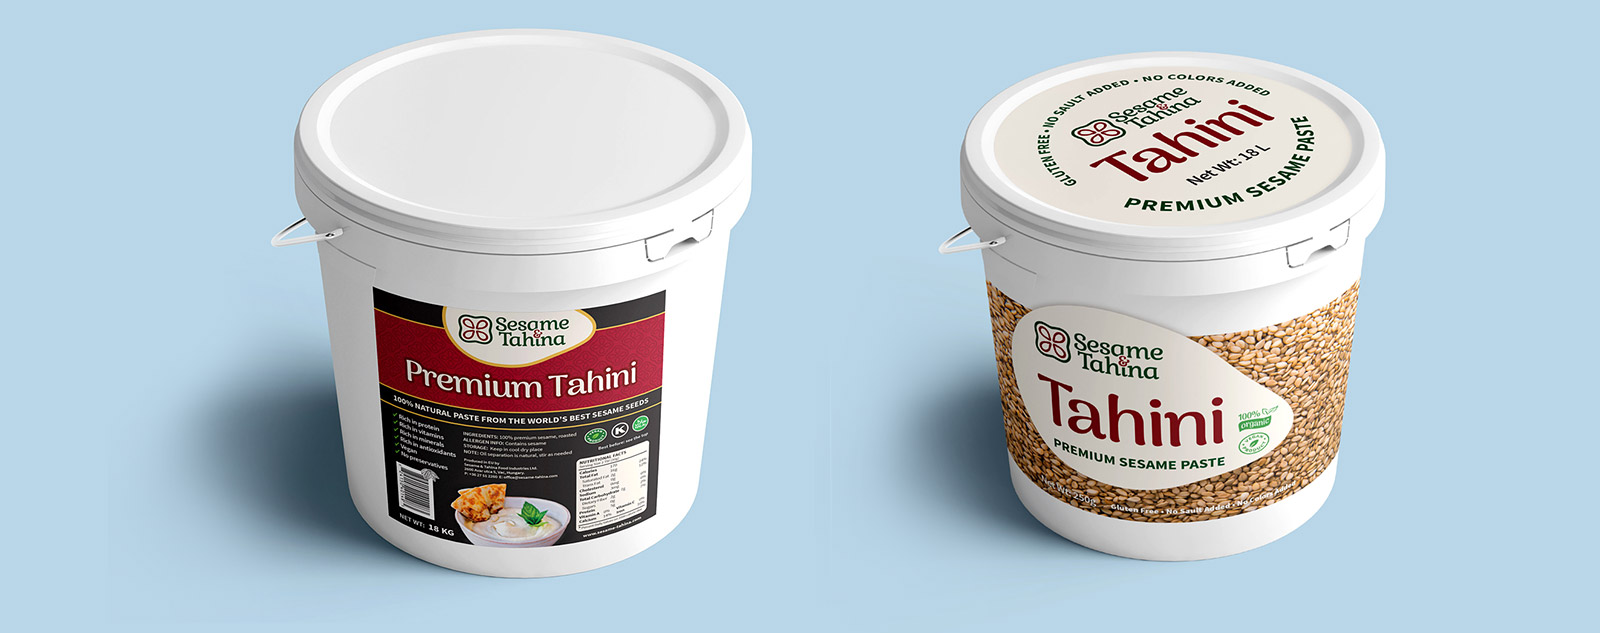 Sesame&Tahina Product Design